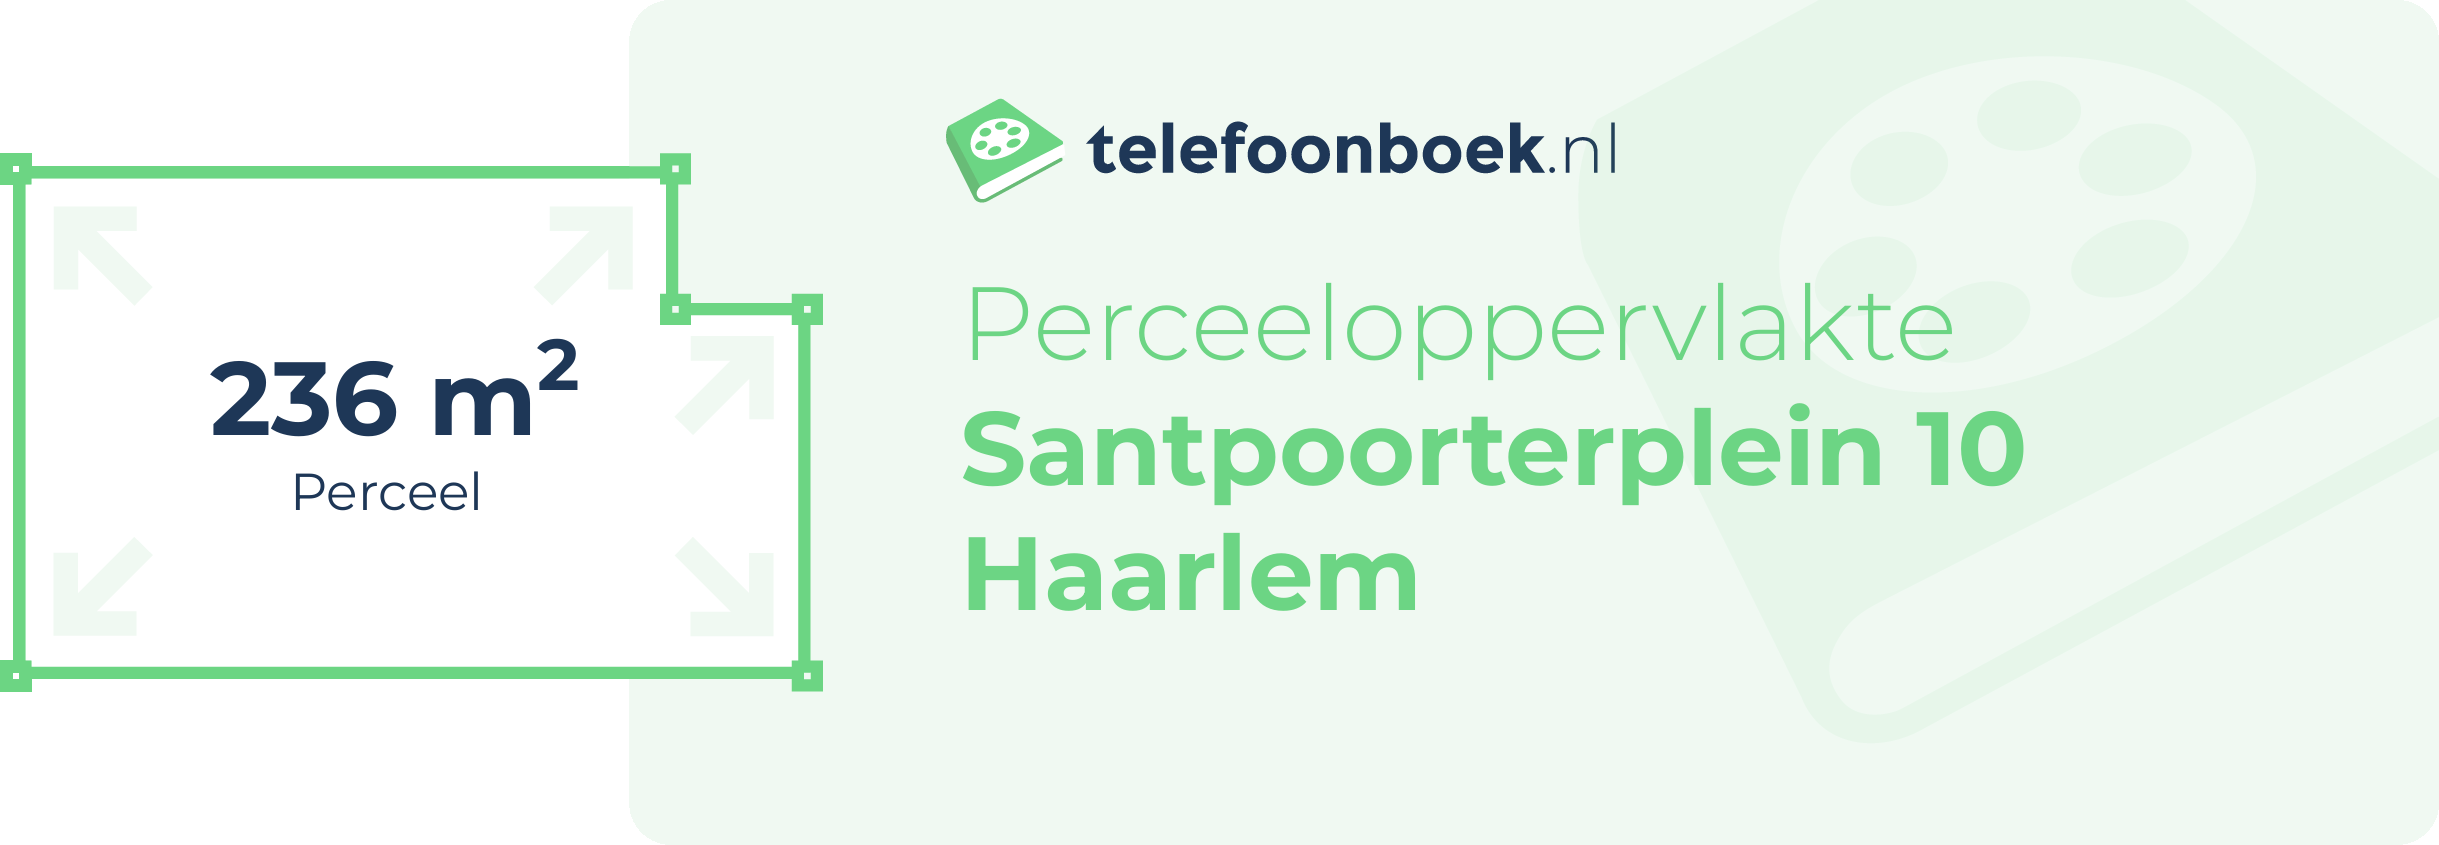 Perceeloppervlakte Santpoorterplein 10 Haarlem